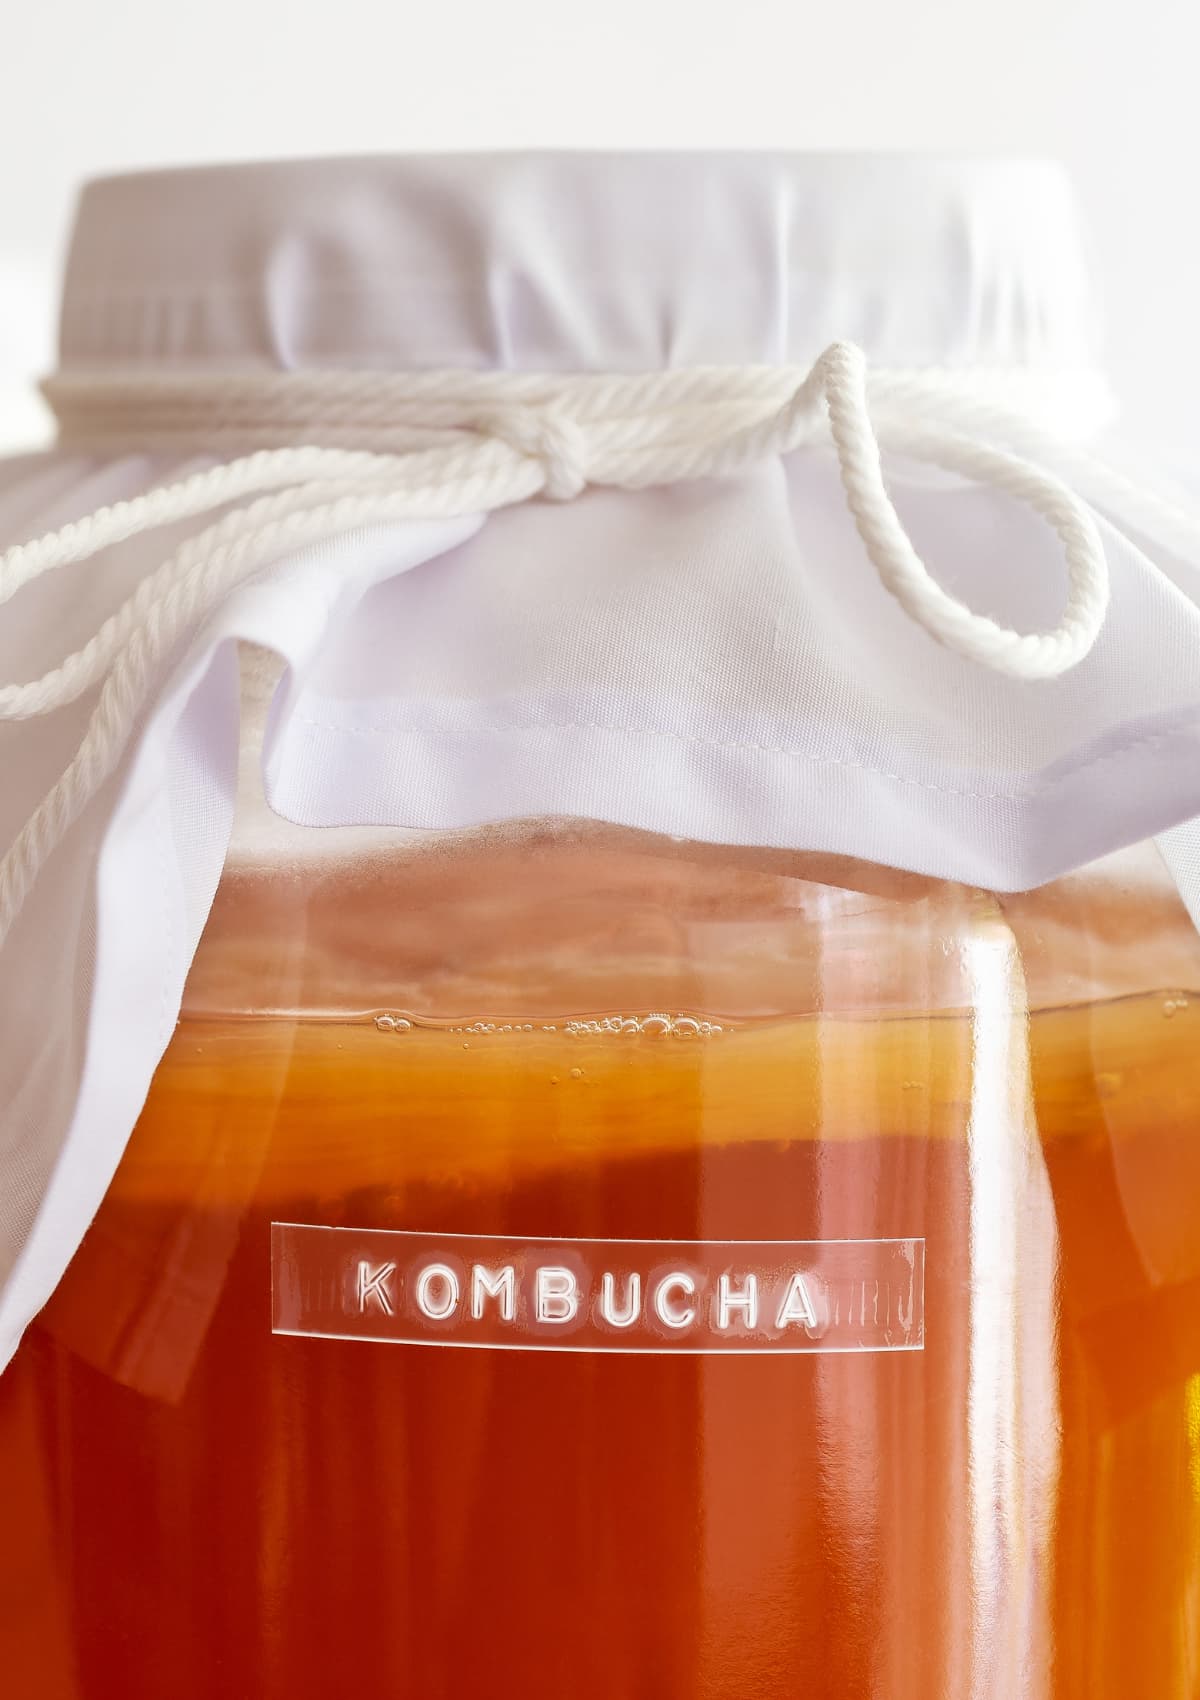 A large jar of homemade kombucha.